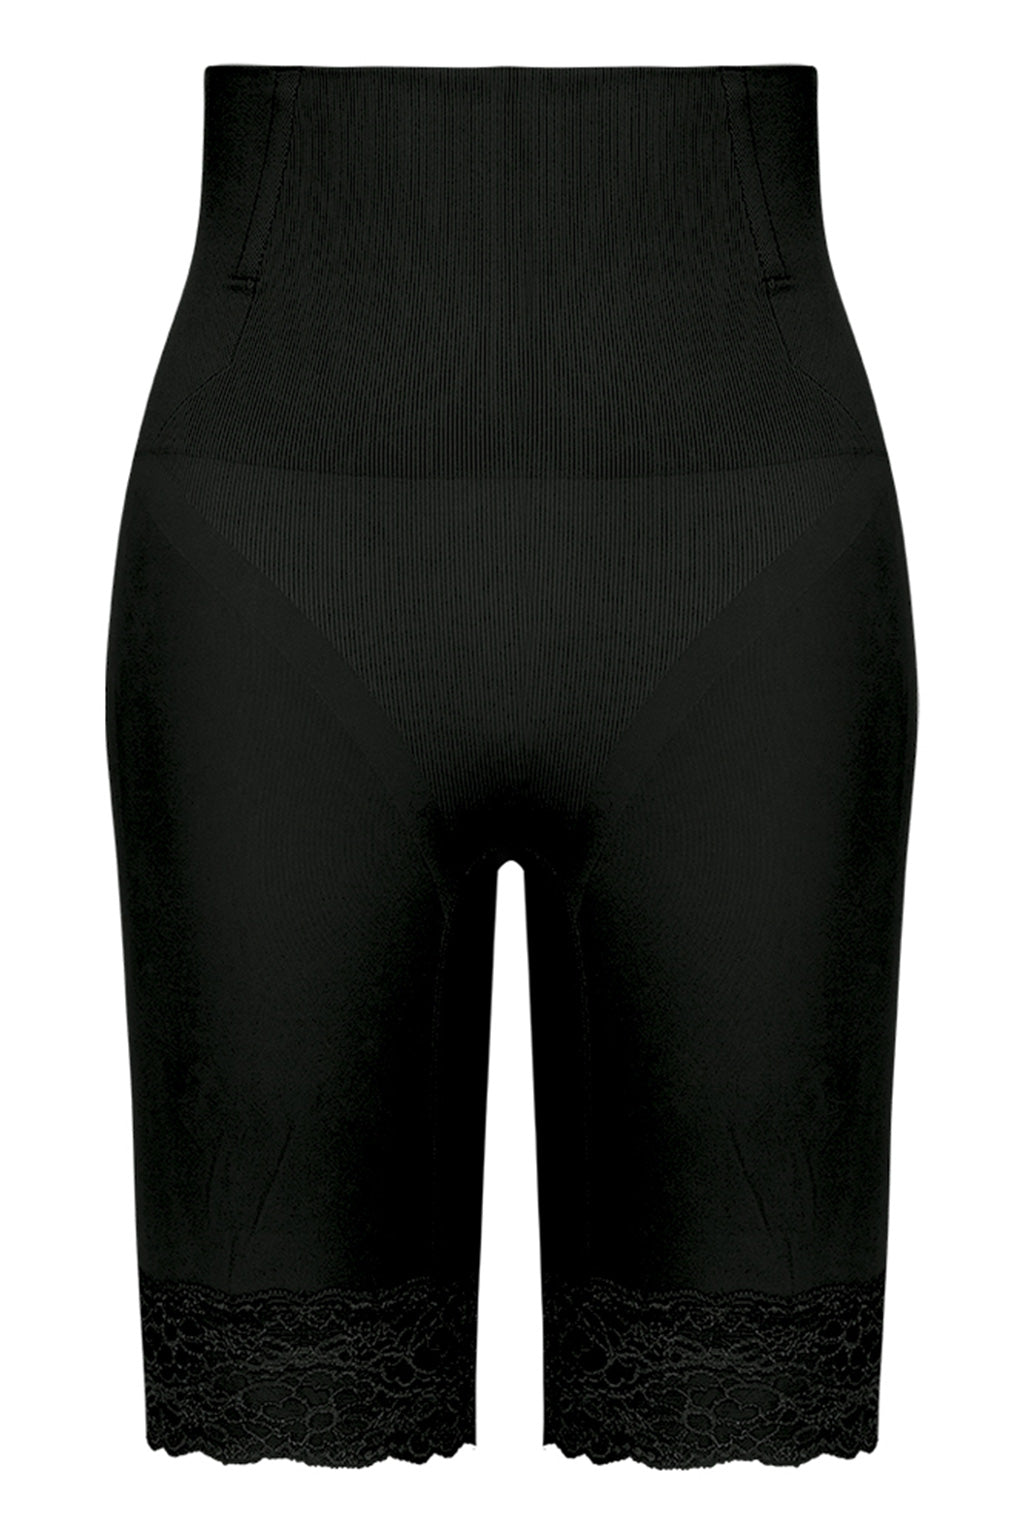 TriFil Womens Hi-Rise Bermuda Shapewear Impuls, Black Large at